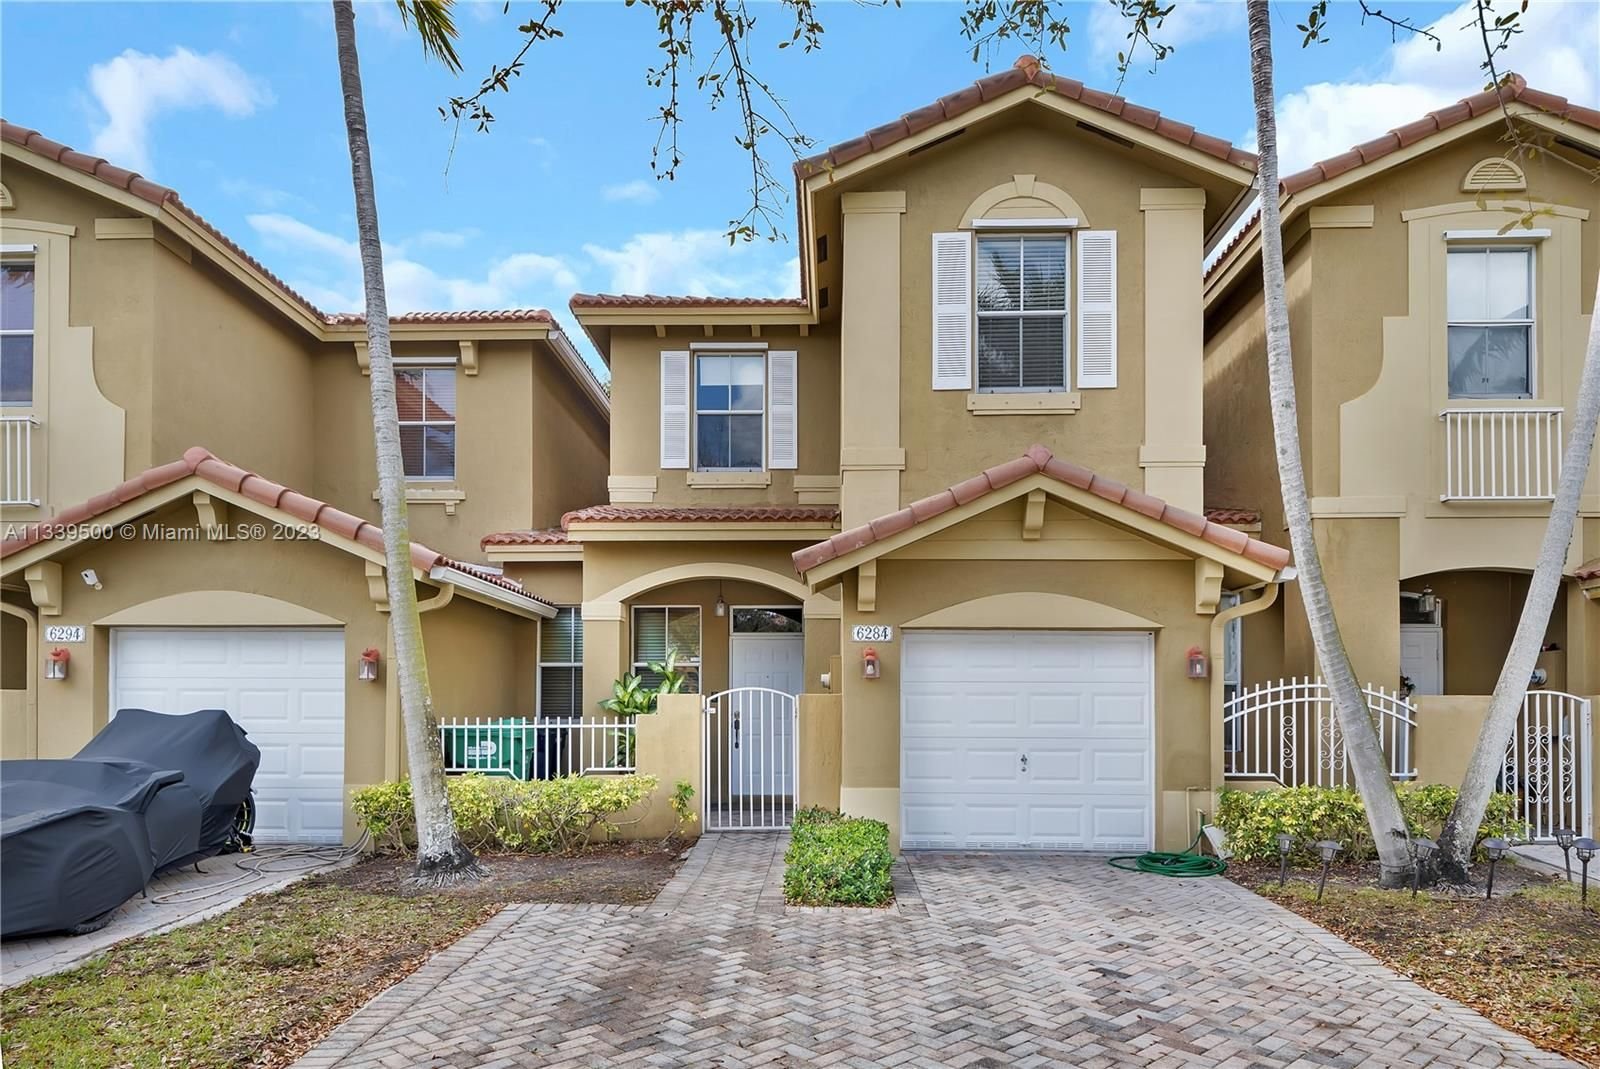 Real estate property located at 6284 165th Ave #6284, Miami-Dade County, Miami, FL